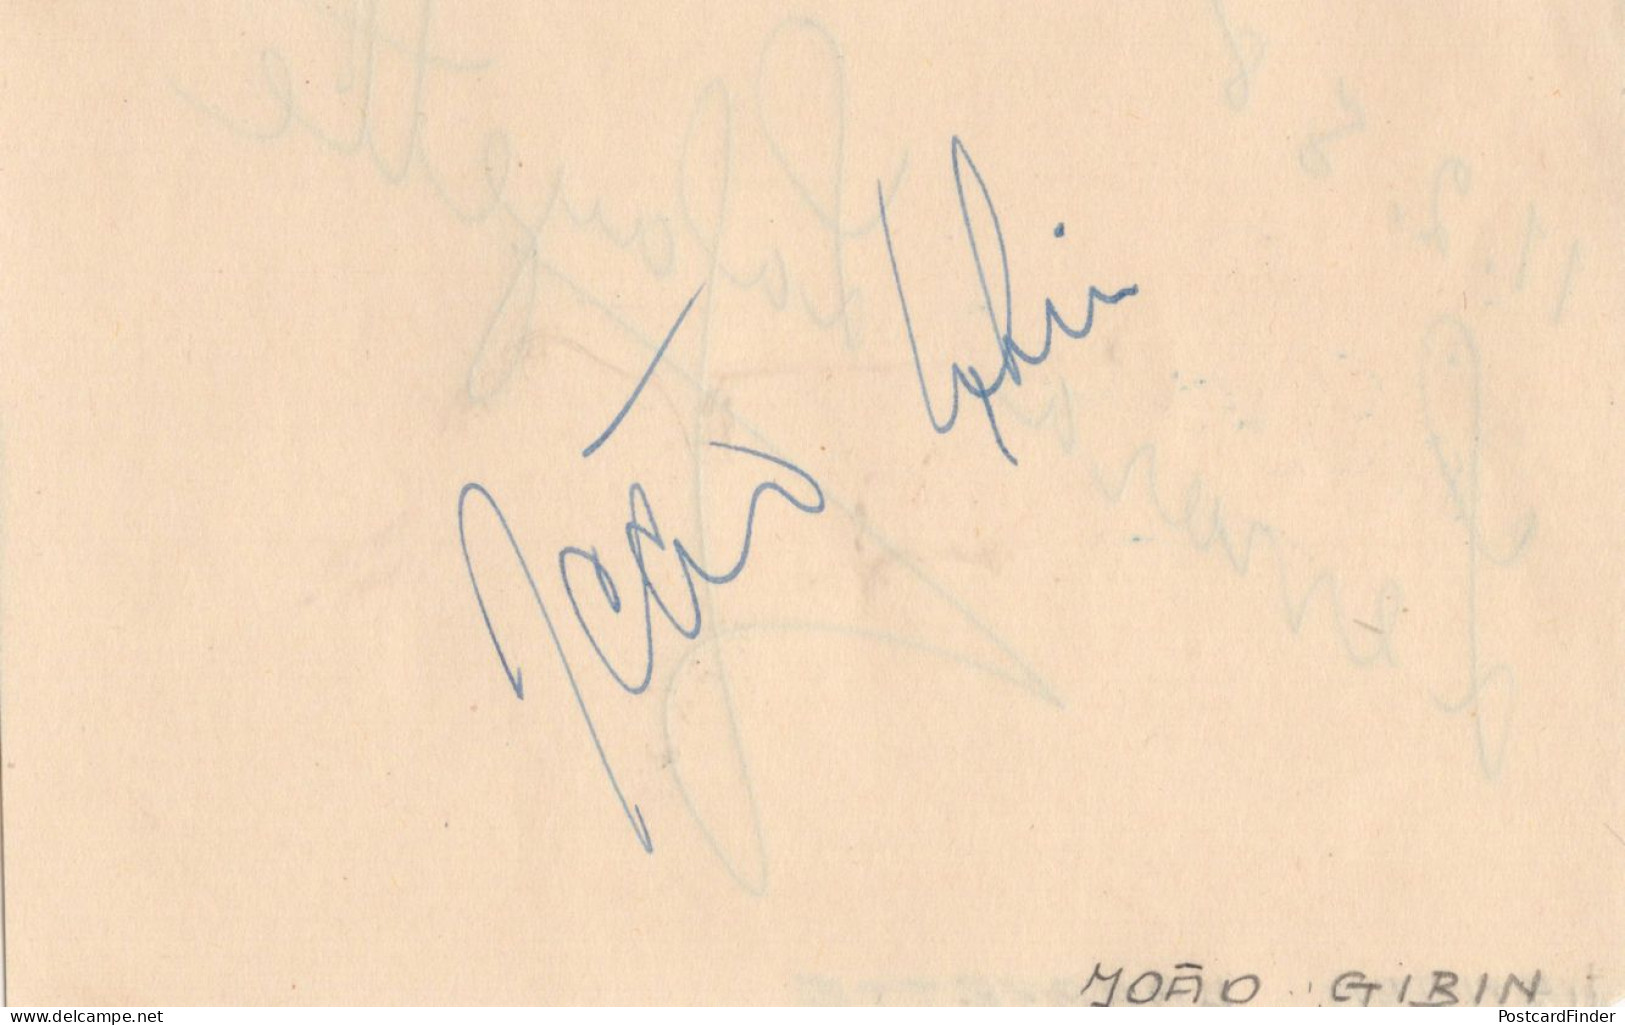 Lenora Lafayette Joao Gibin 2x Brazil USA Old Opera Autograph S - Singers & Musicians